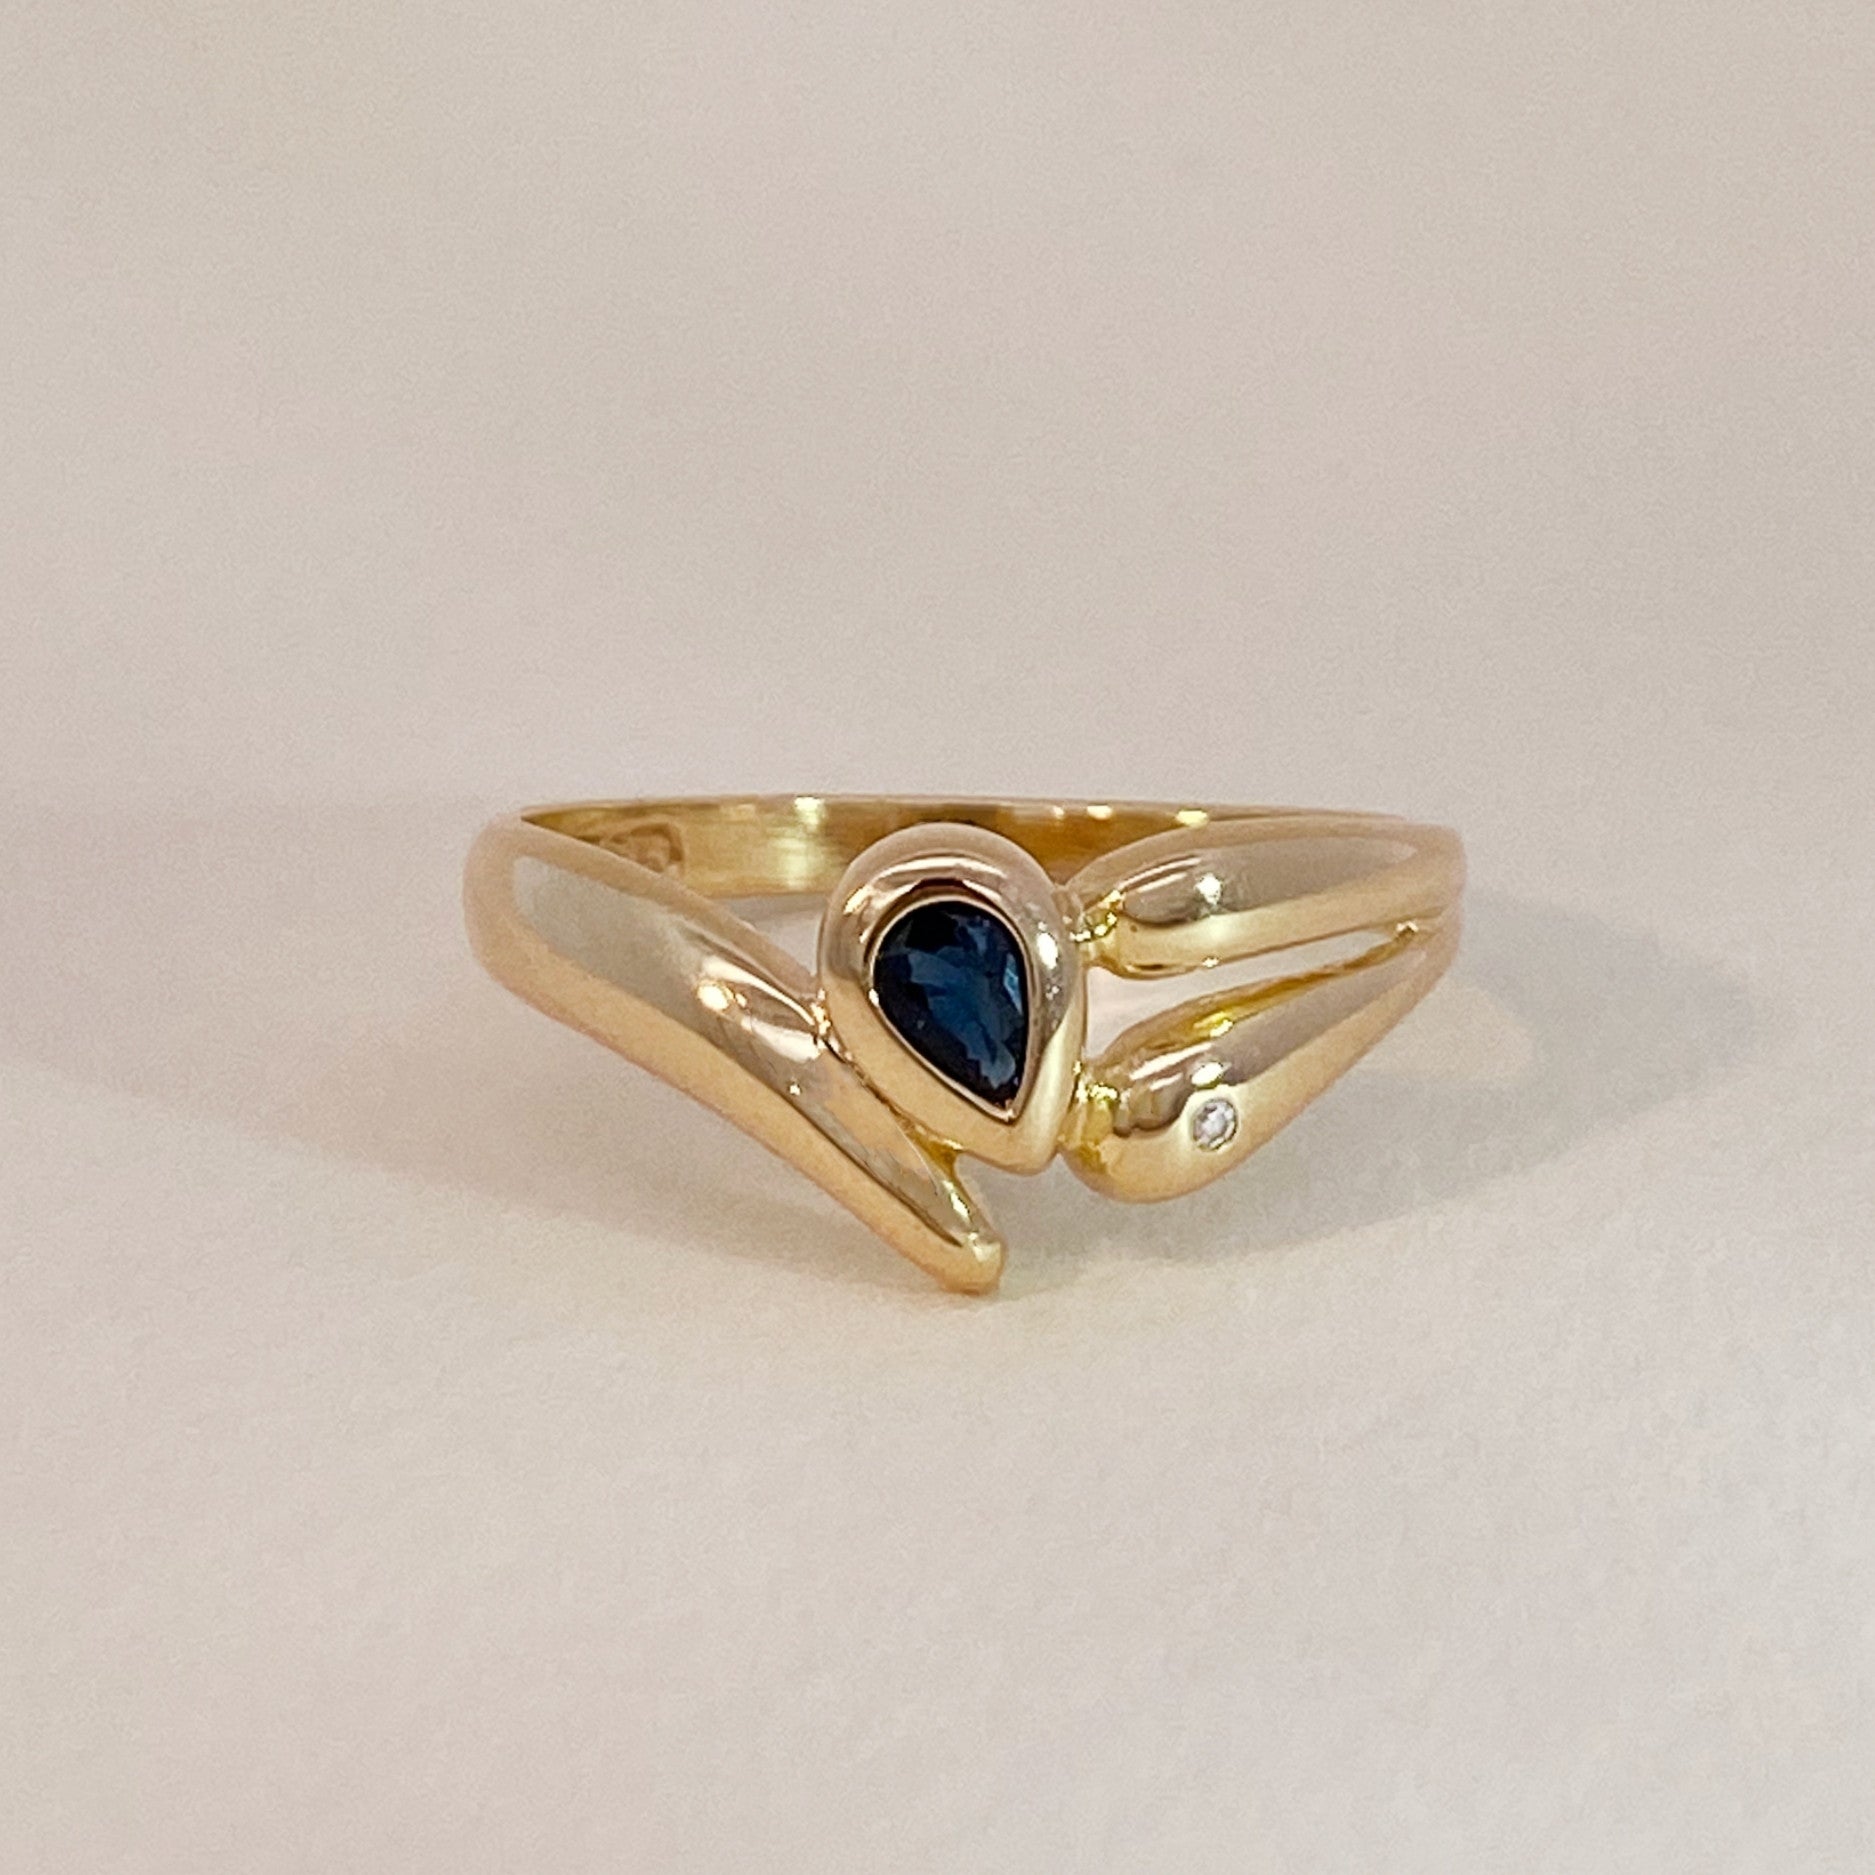 Vintage sapphire drop ring